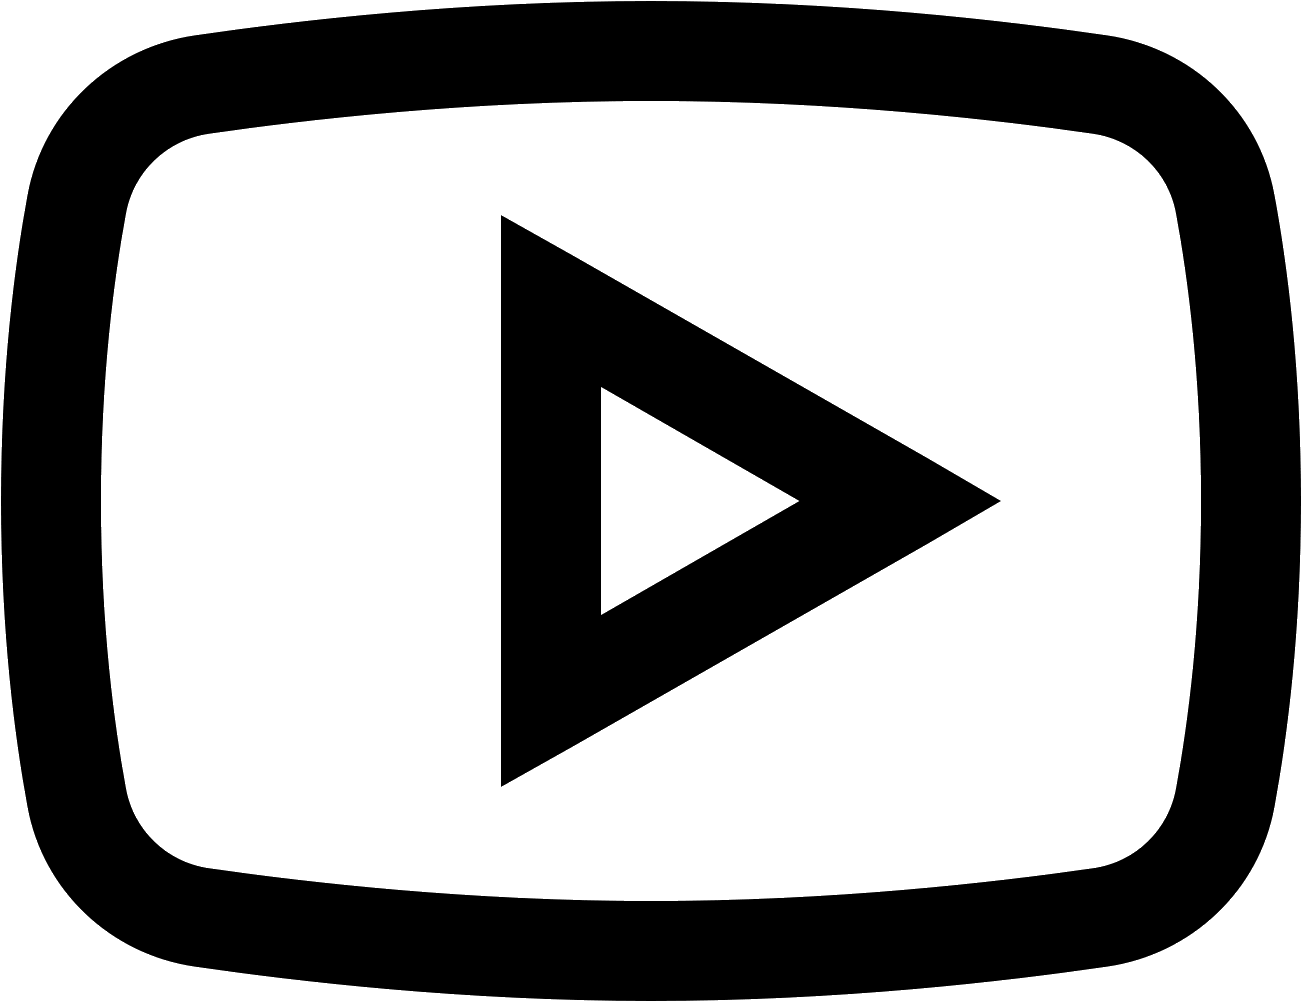 Square YouTube Logo PNG Image Background